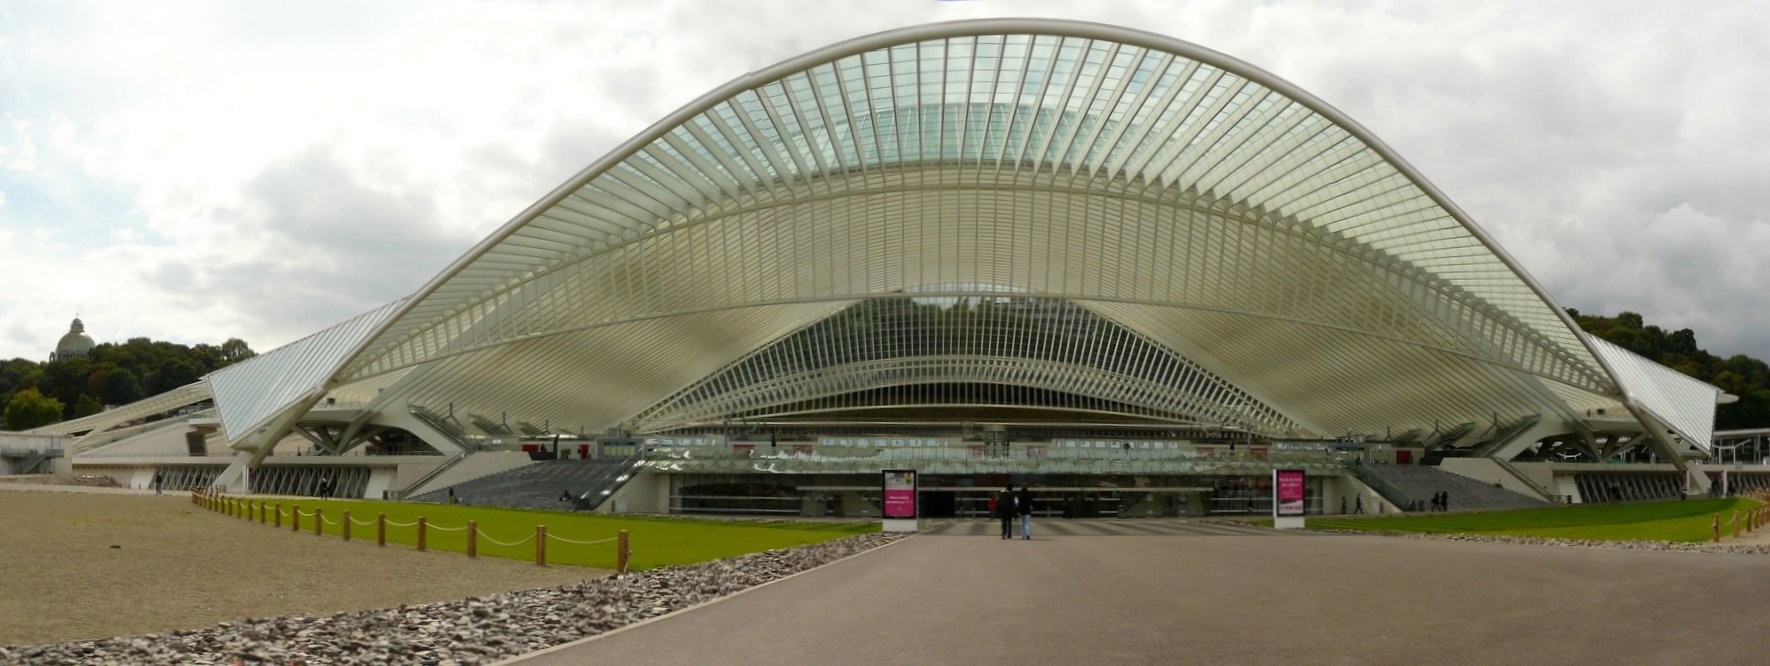 gare de Liège Gare_d11